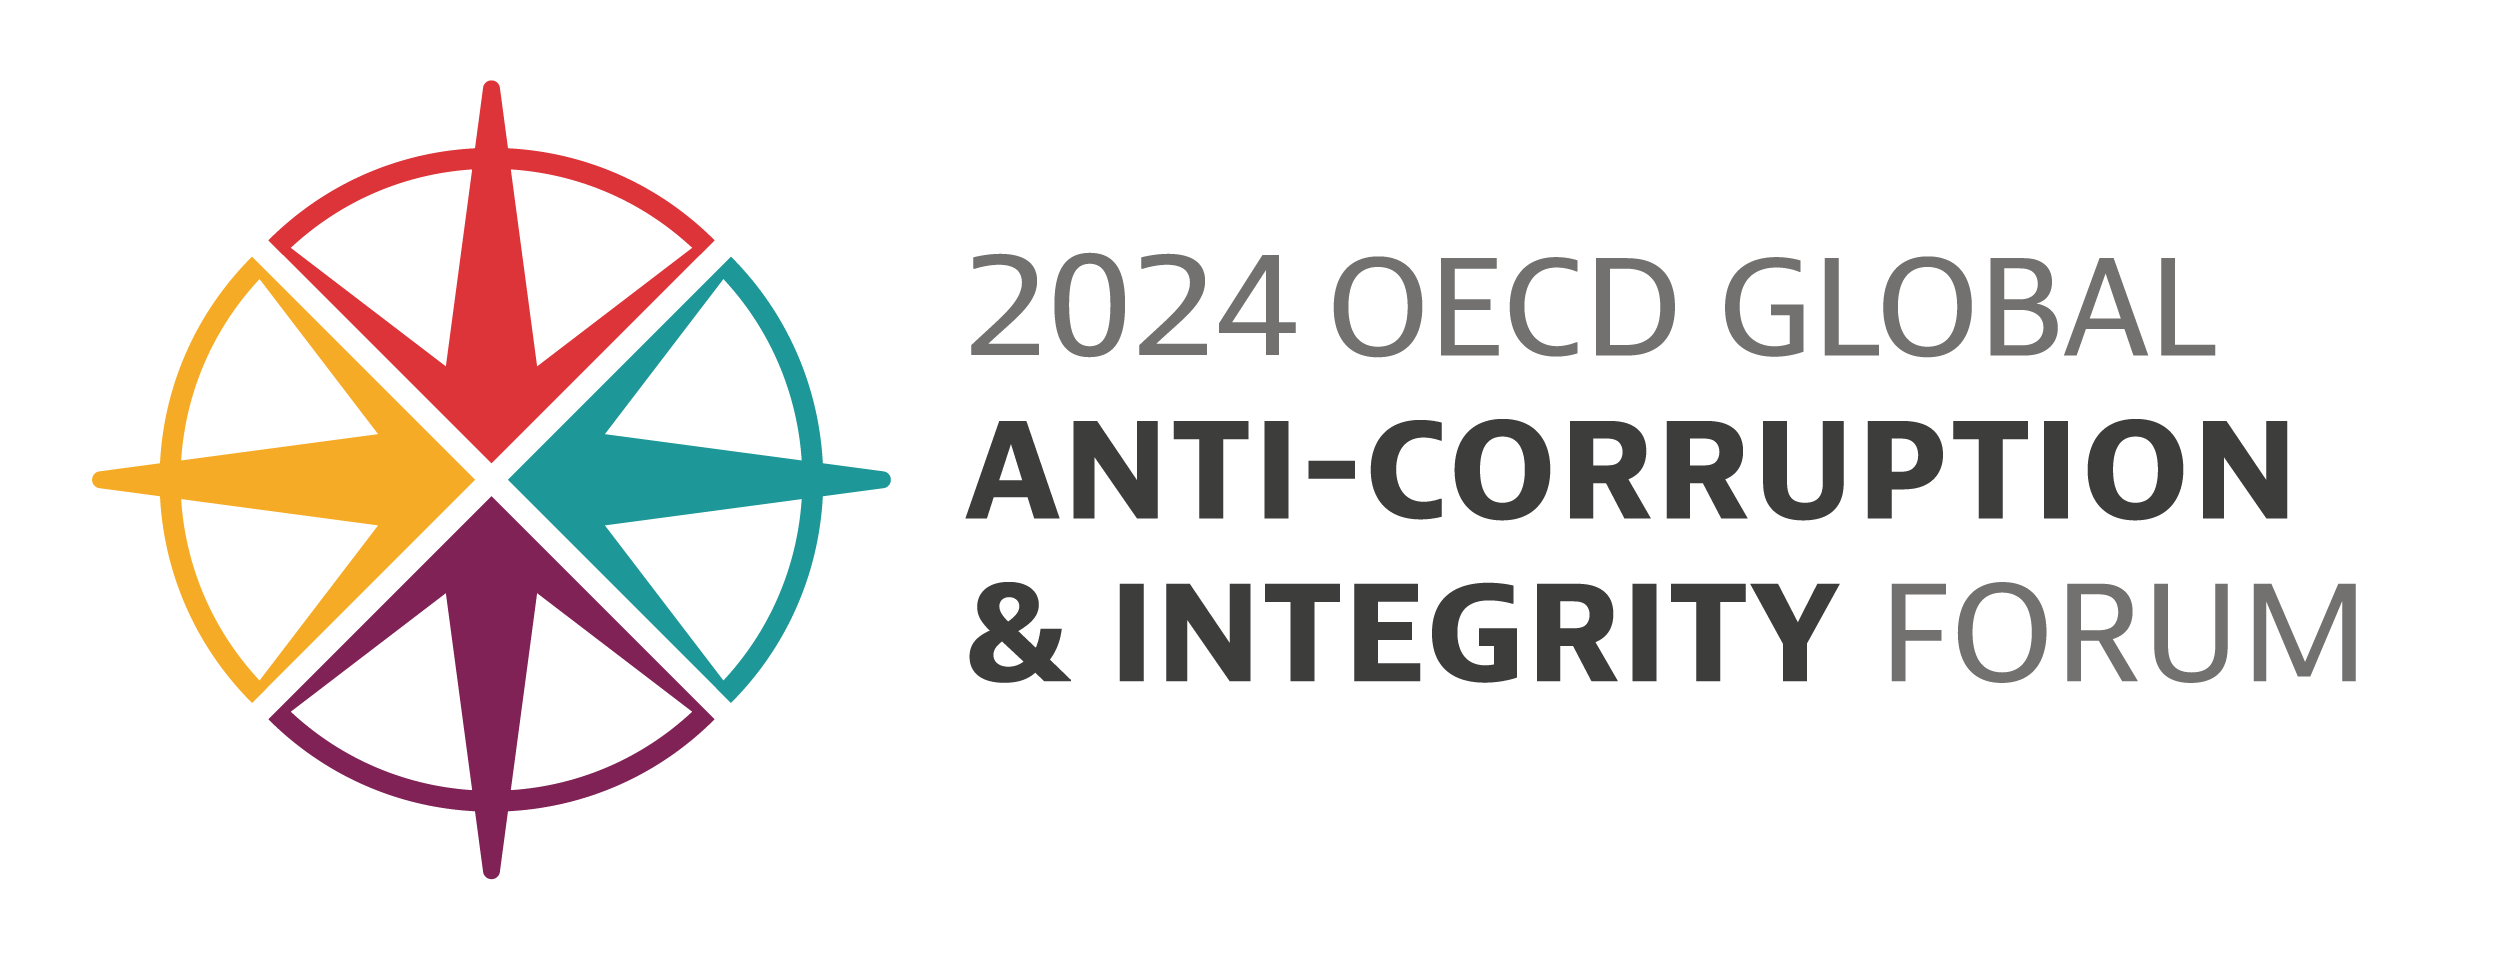 2024 OECD Global Anti-Corruption & Integrity Forum